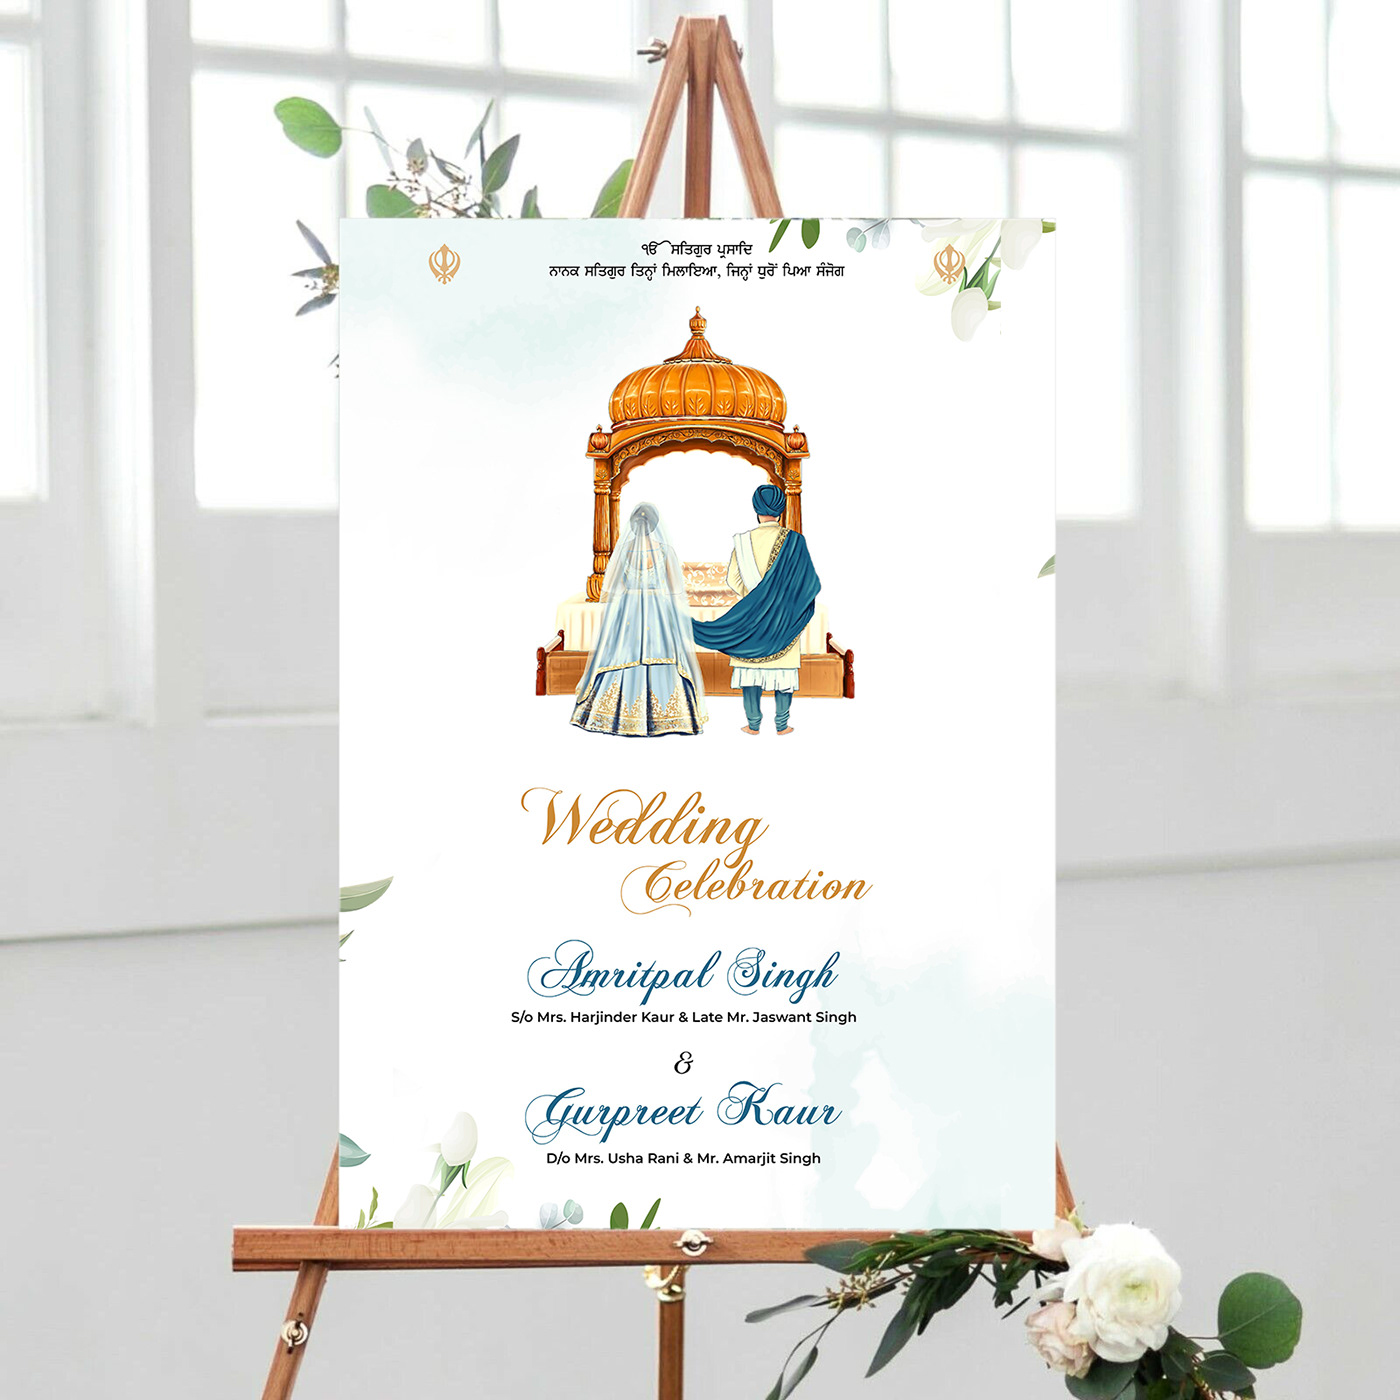 wedding wedding invitation cards print Invitation party invitation Event party welcomesigns